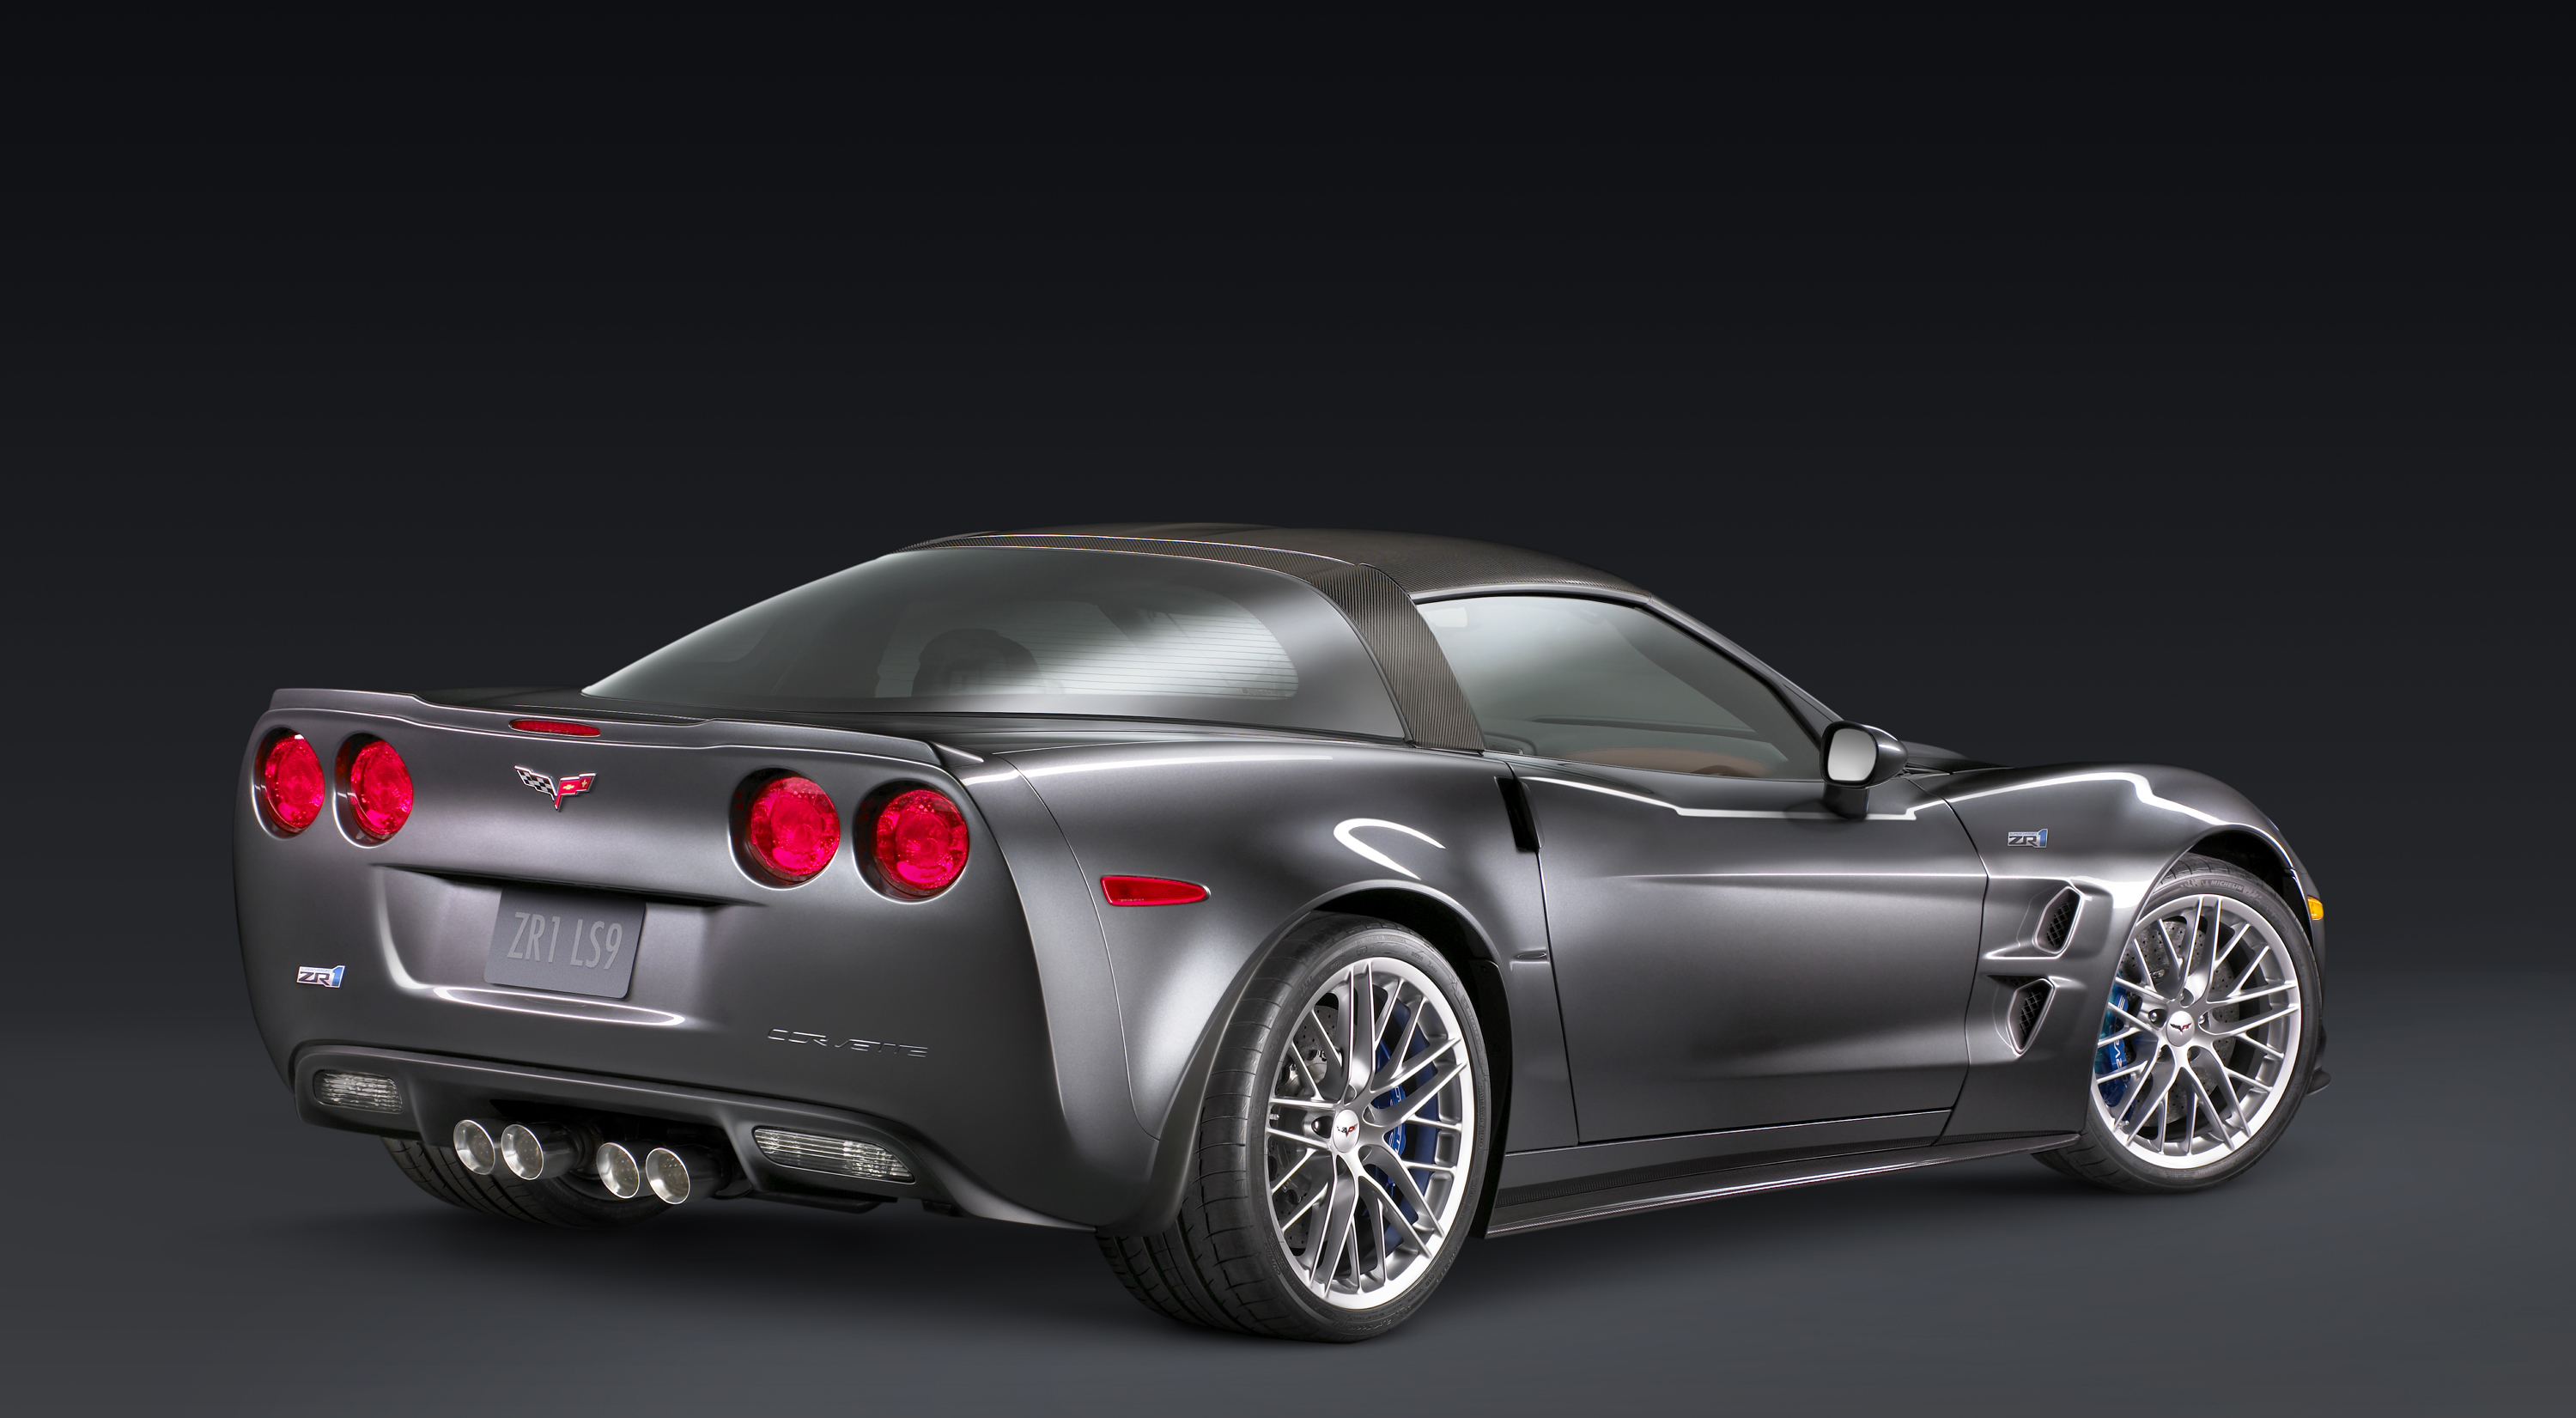 cars, concept art, vehicles, Chevrolet Corvette, rear angle view - desktop wallpaper